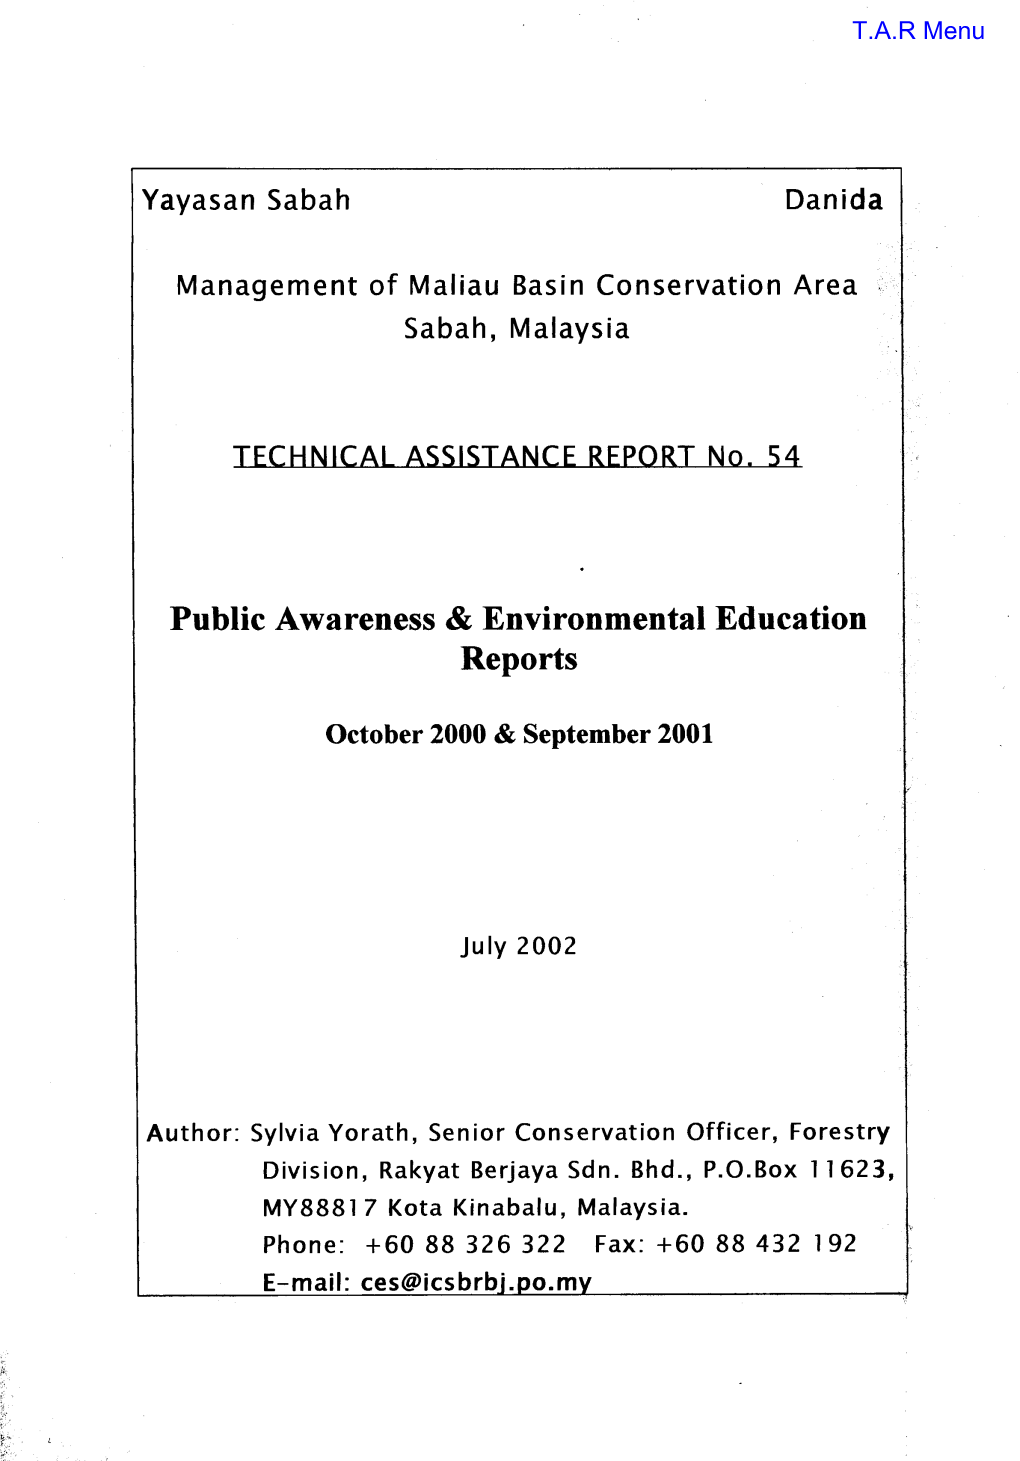 Public Awareness & Environmental Education Reports